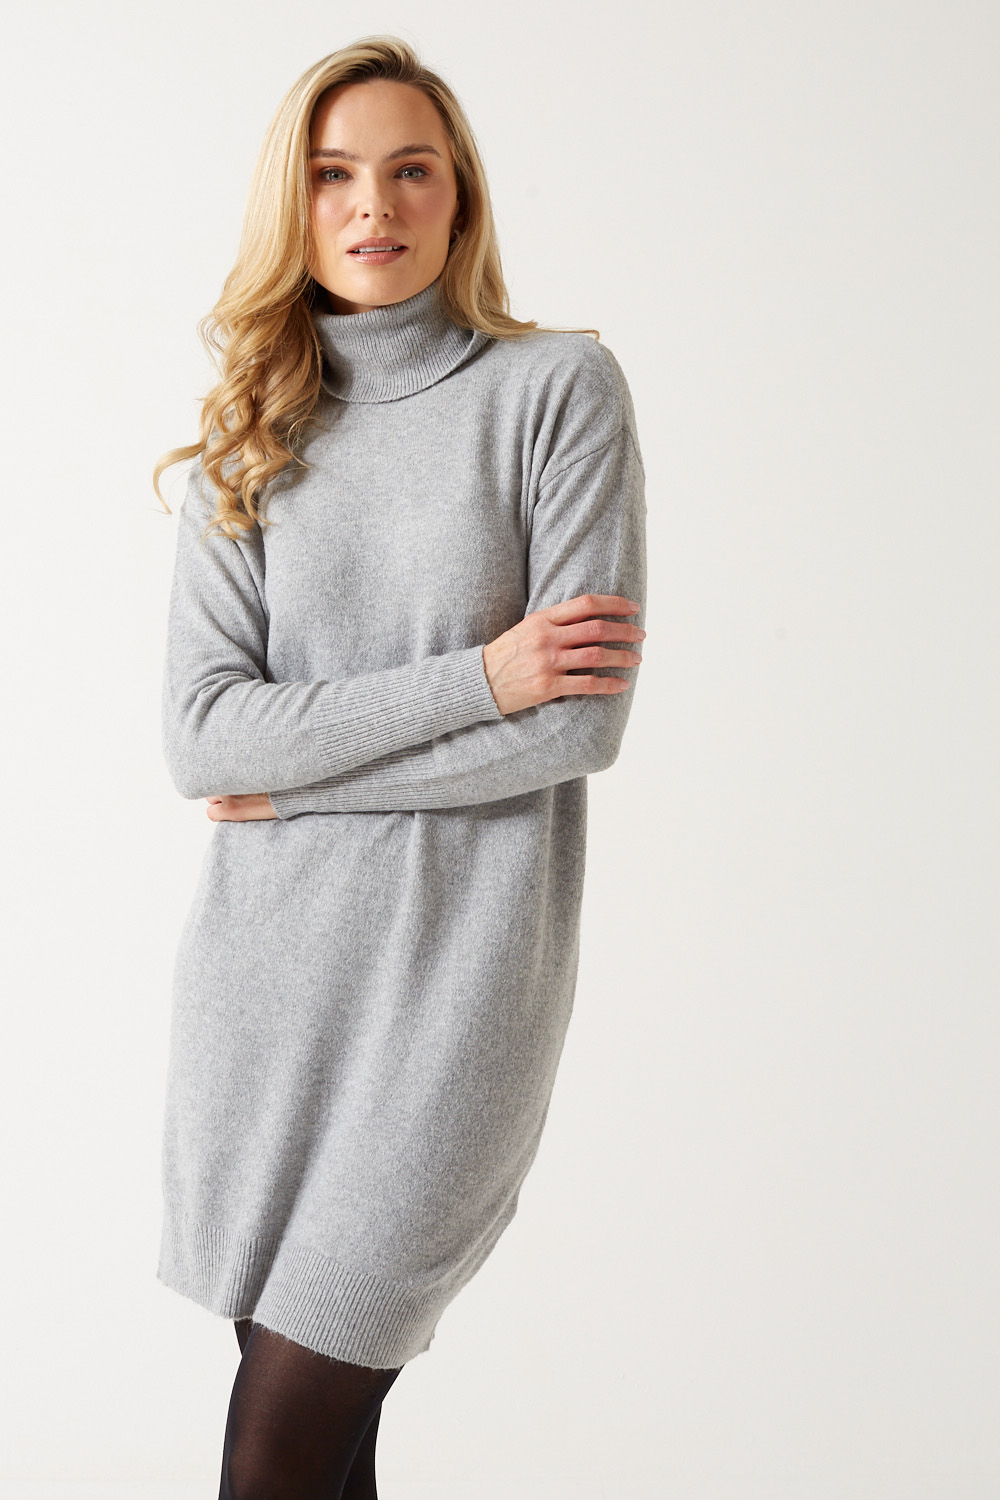 Vero Moda Brilliant Rollneck Jumper Dress in Light Grey | iCLOTHING -  iCLOTHING